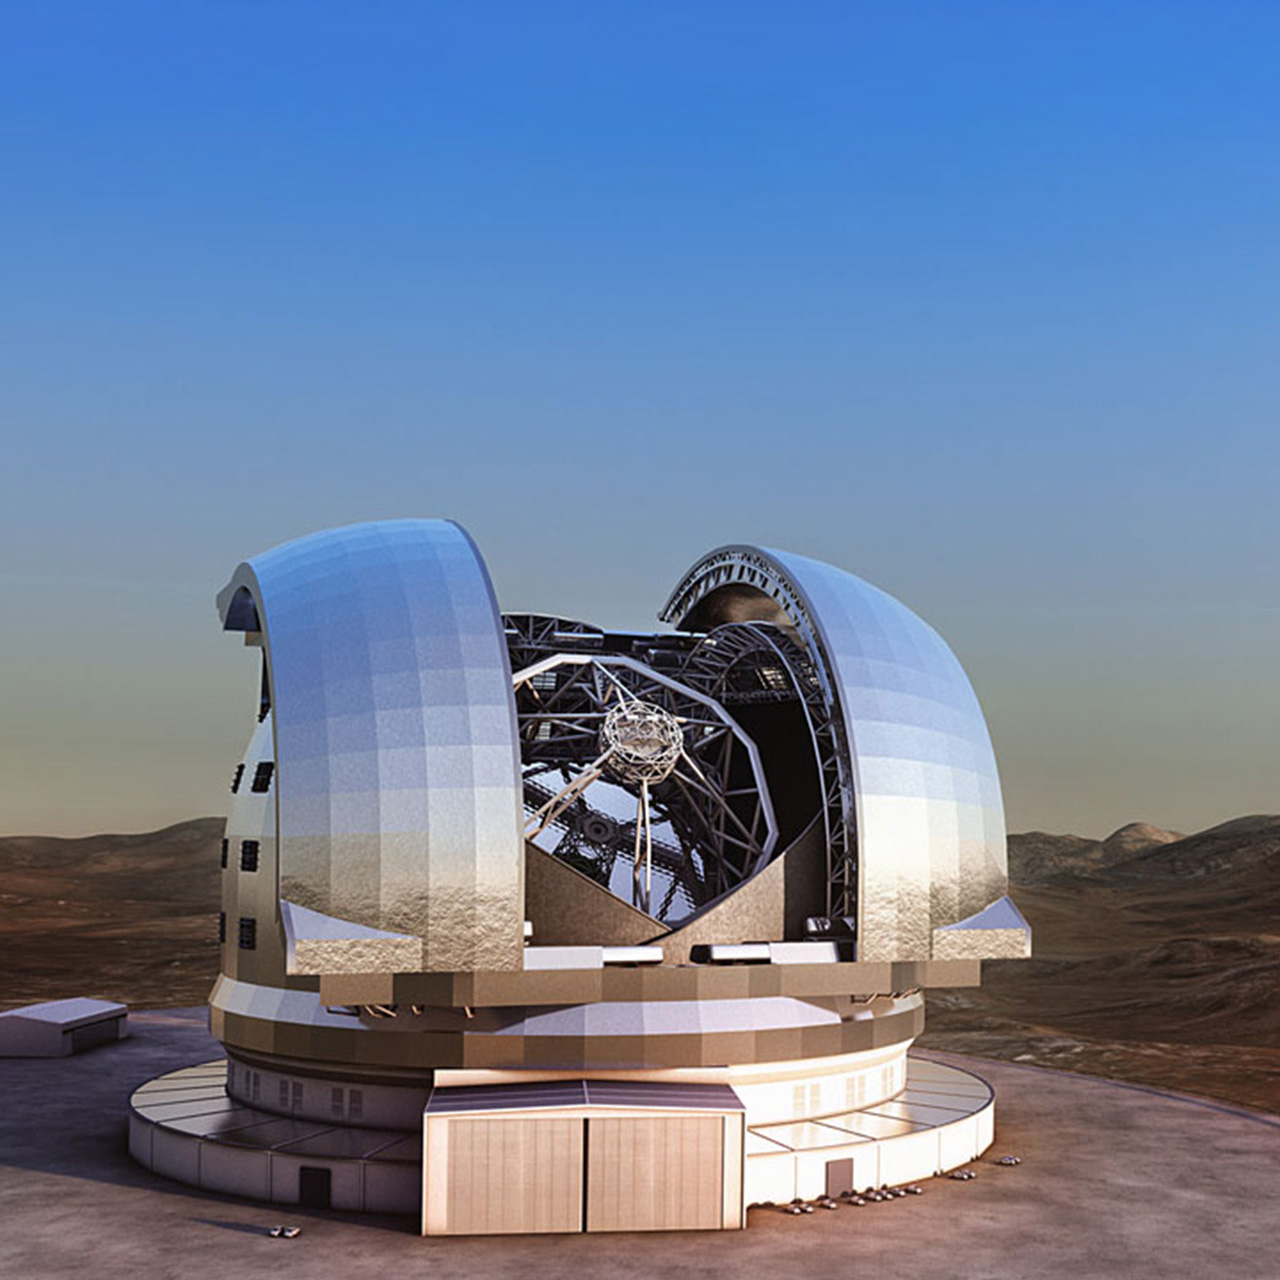 ELT, the world’s largest telescope, IDF fire strategy